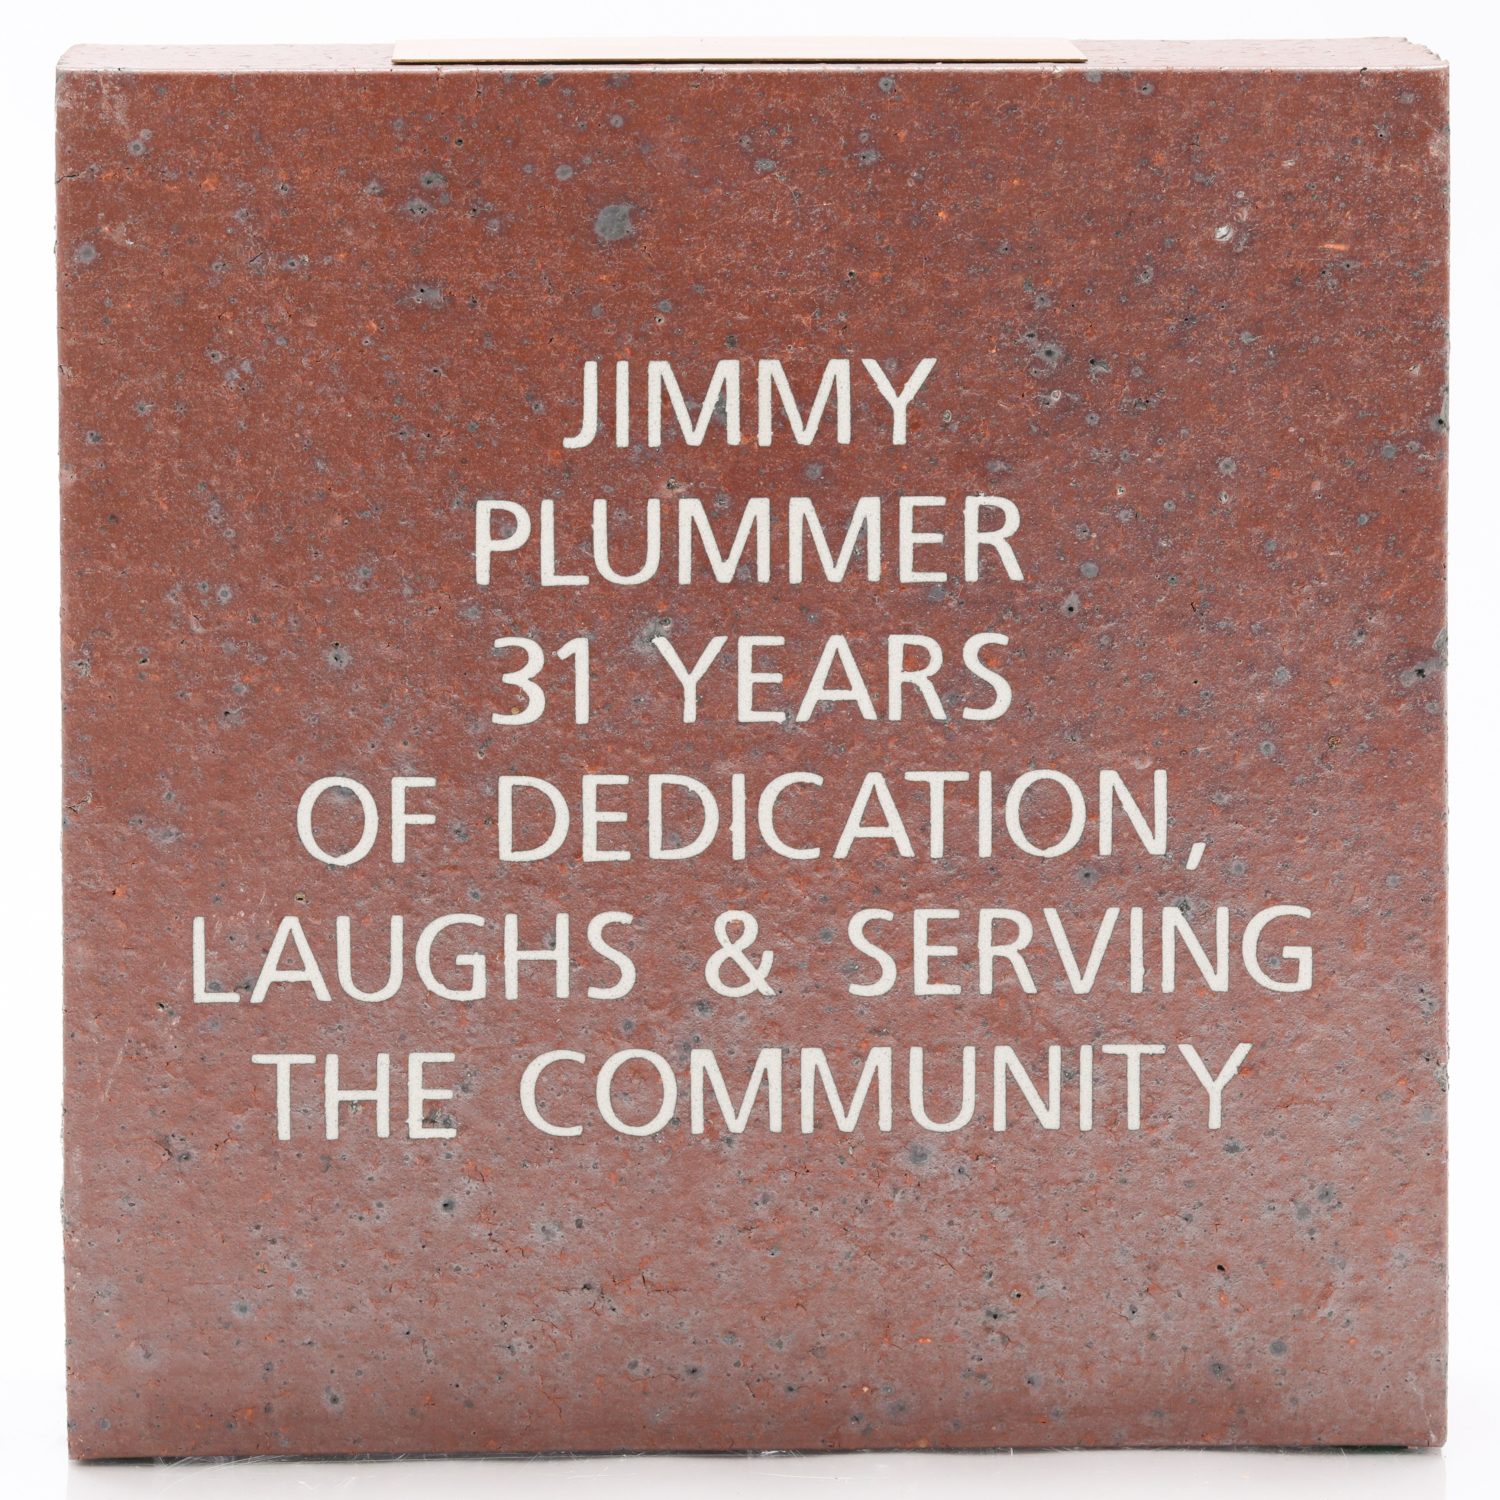 Brick Honors Jimmy Plummer's 31 Years